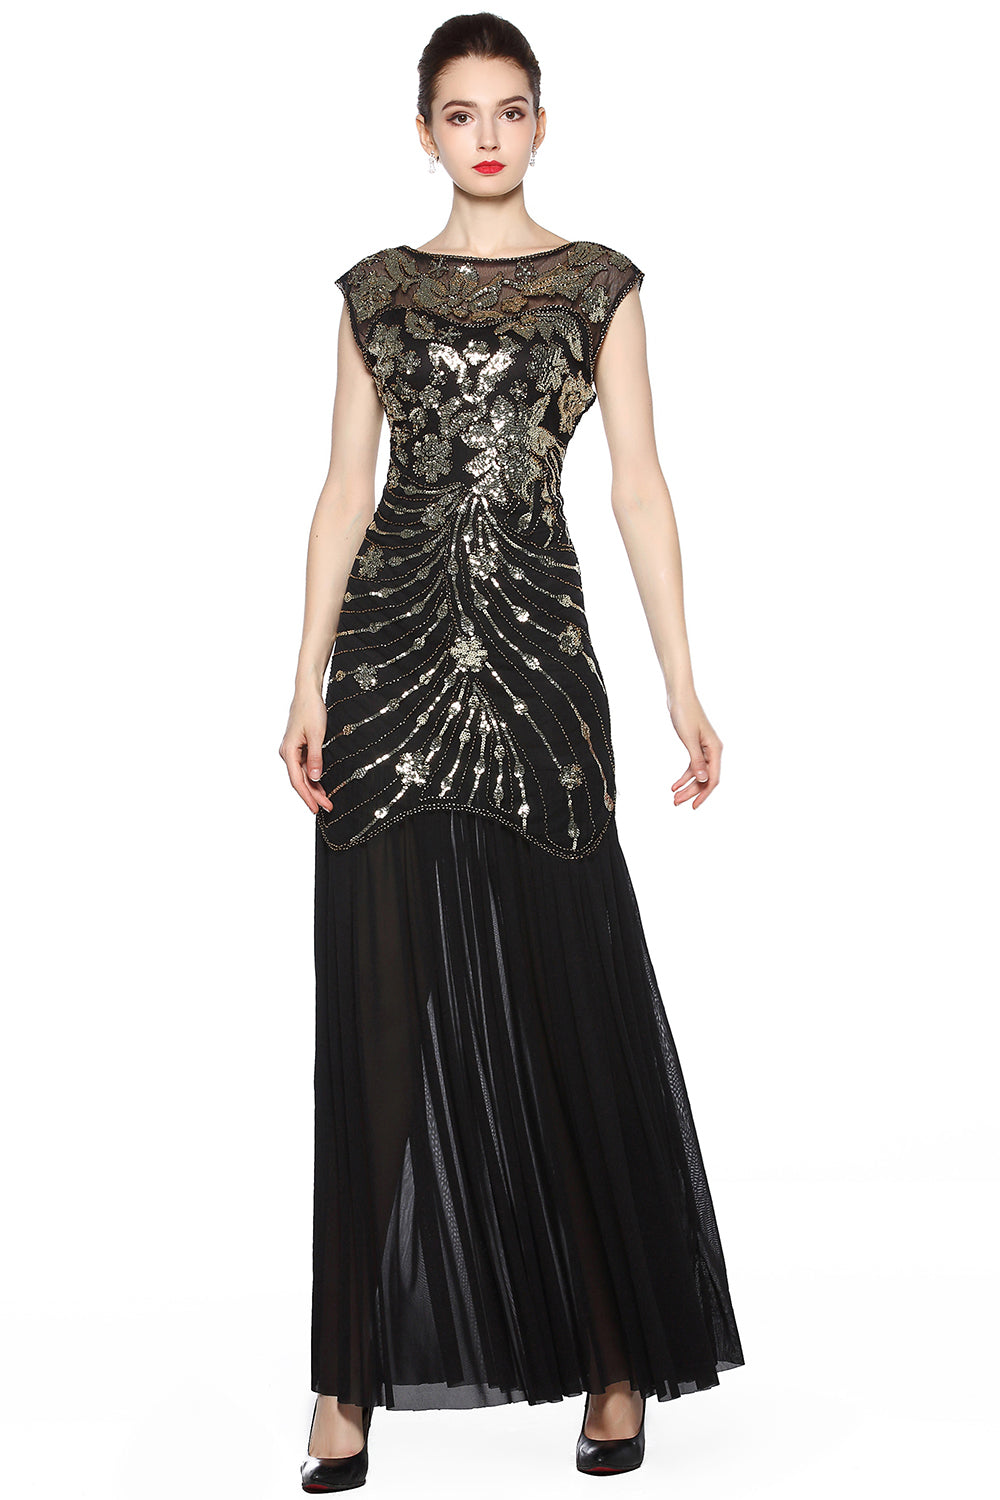 Black Sequin Long 1920s Dress